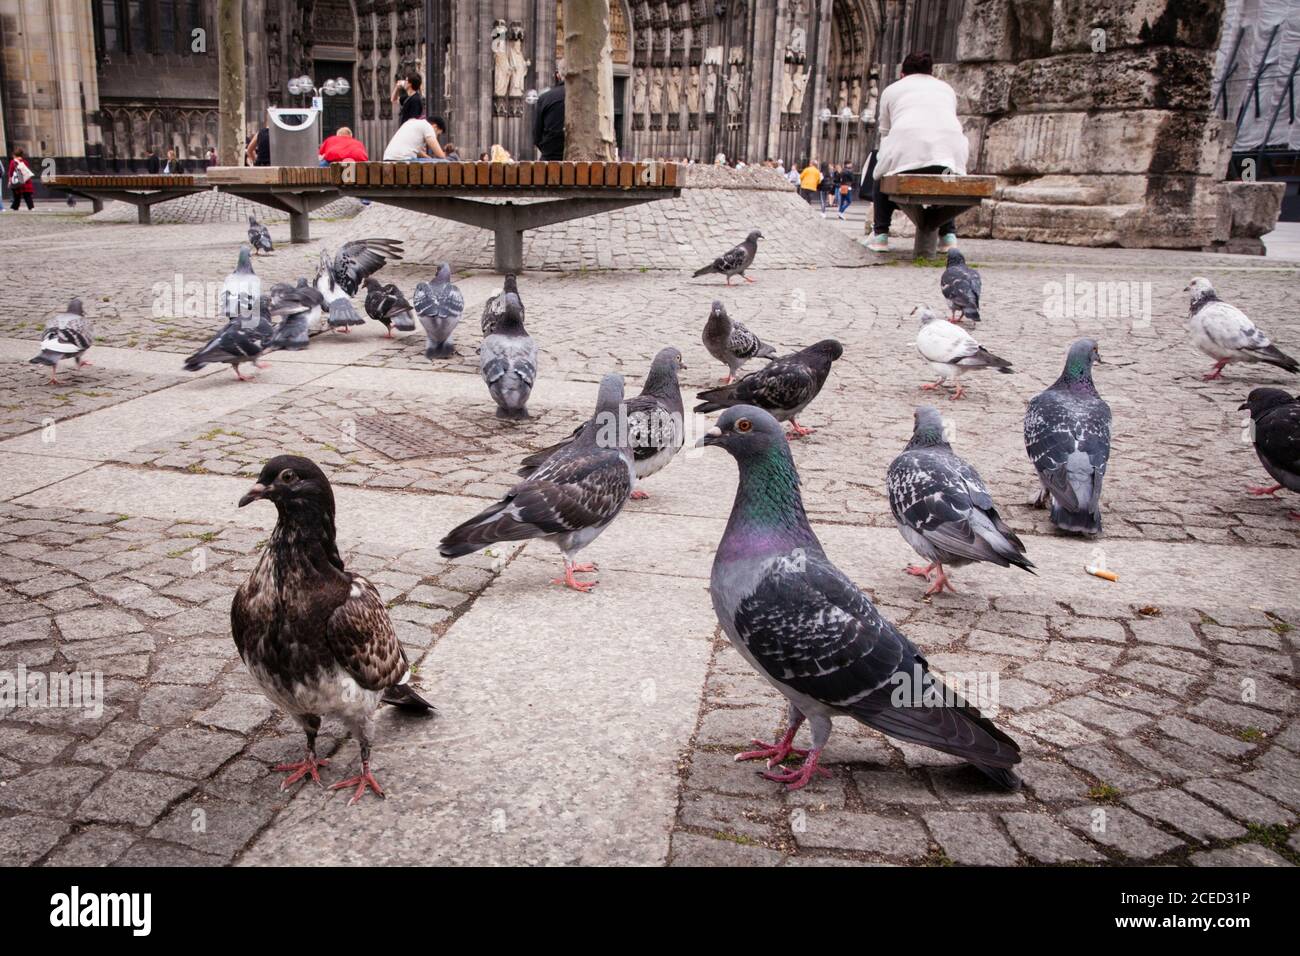 feral pigeons in front of the cathedral, Cologne, Germany.  Stadttauben vor dem Dom, Koeln, Deutschland. Stock Photo